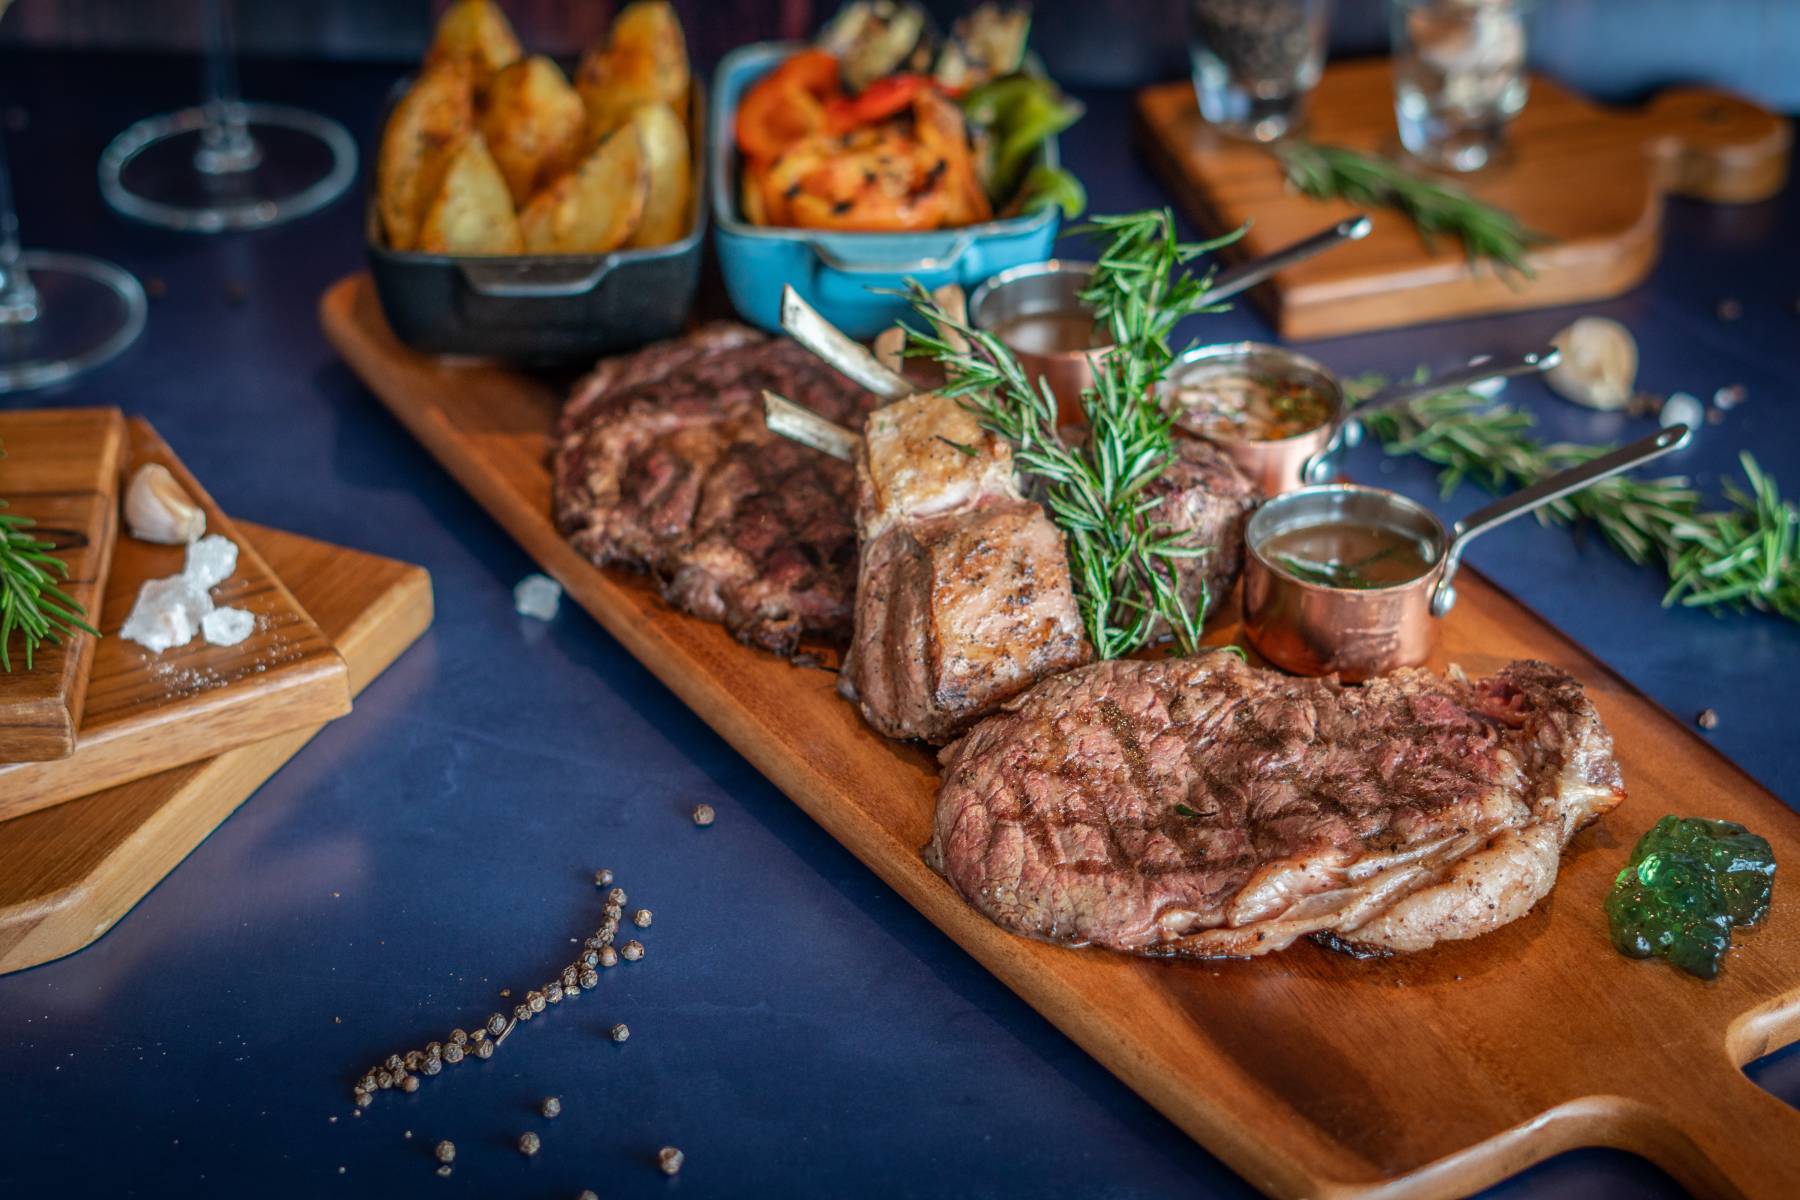 blue-marble-steak-grill-restaurant-%e3%83%96%e3%83%ab%e3%83%bc%e3%83%9e%e3%83%bc%e3%83%96%e3%83%ab-%e3%82%b9%e3%83%86%e3%83%bc%e3%82%ad%ef%bc%86%e3%82%b0%e3%83%aa%e3%83%ab%e3%83%ac%e3%82%b9